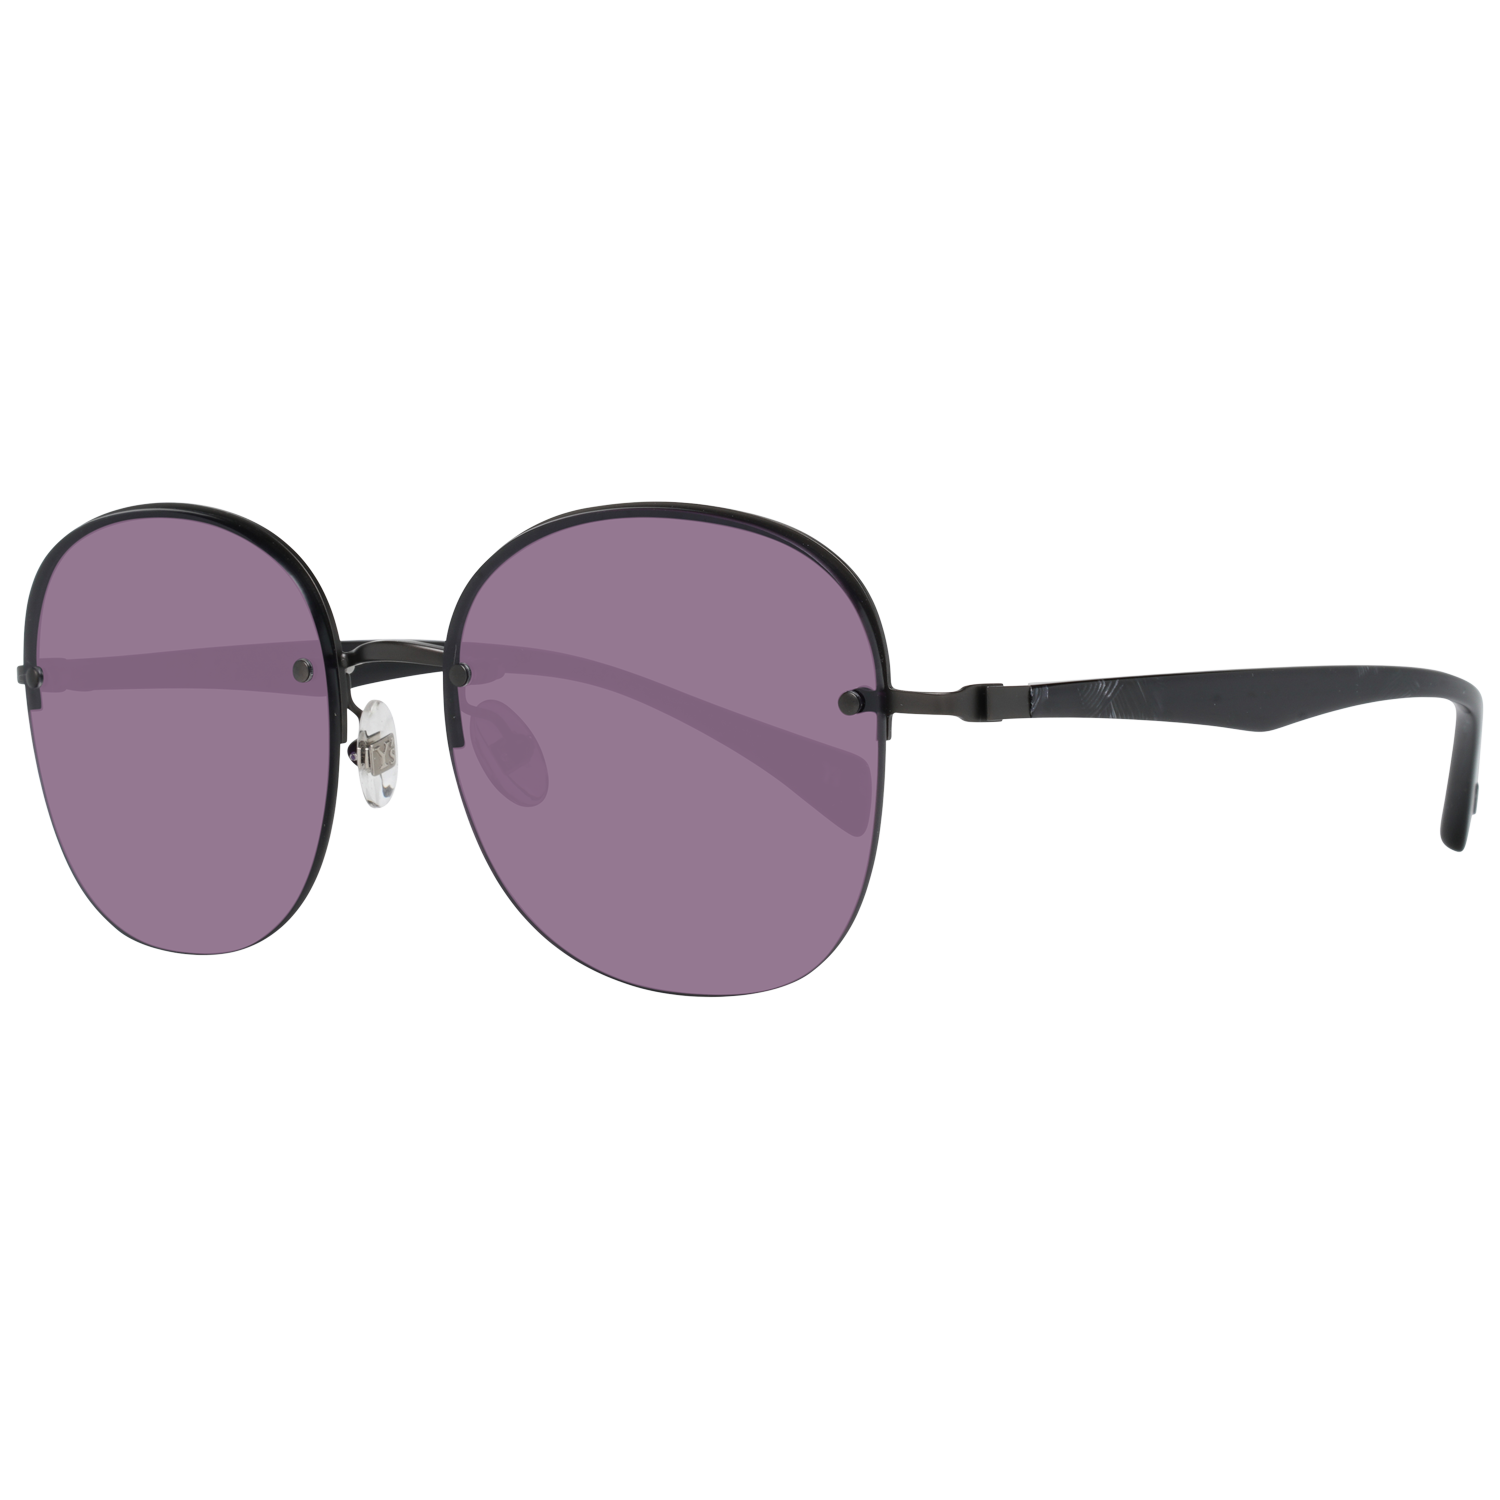 Yohji Yamamoto Sunglasses YS7003 901 56 Grey